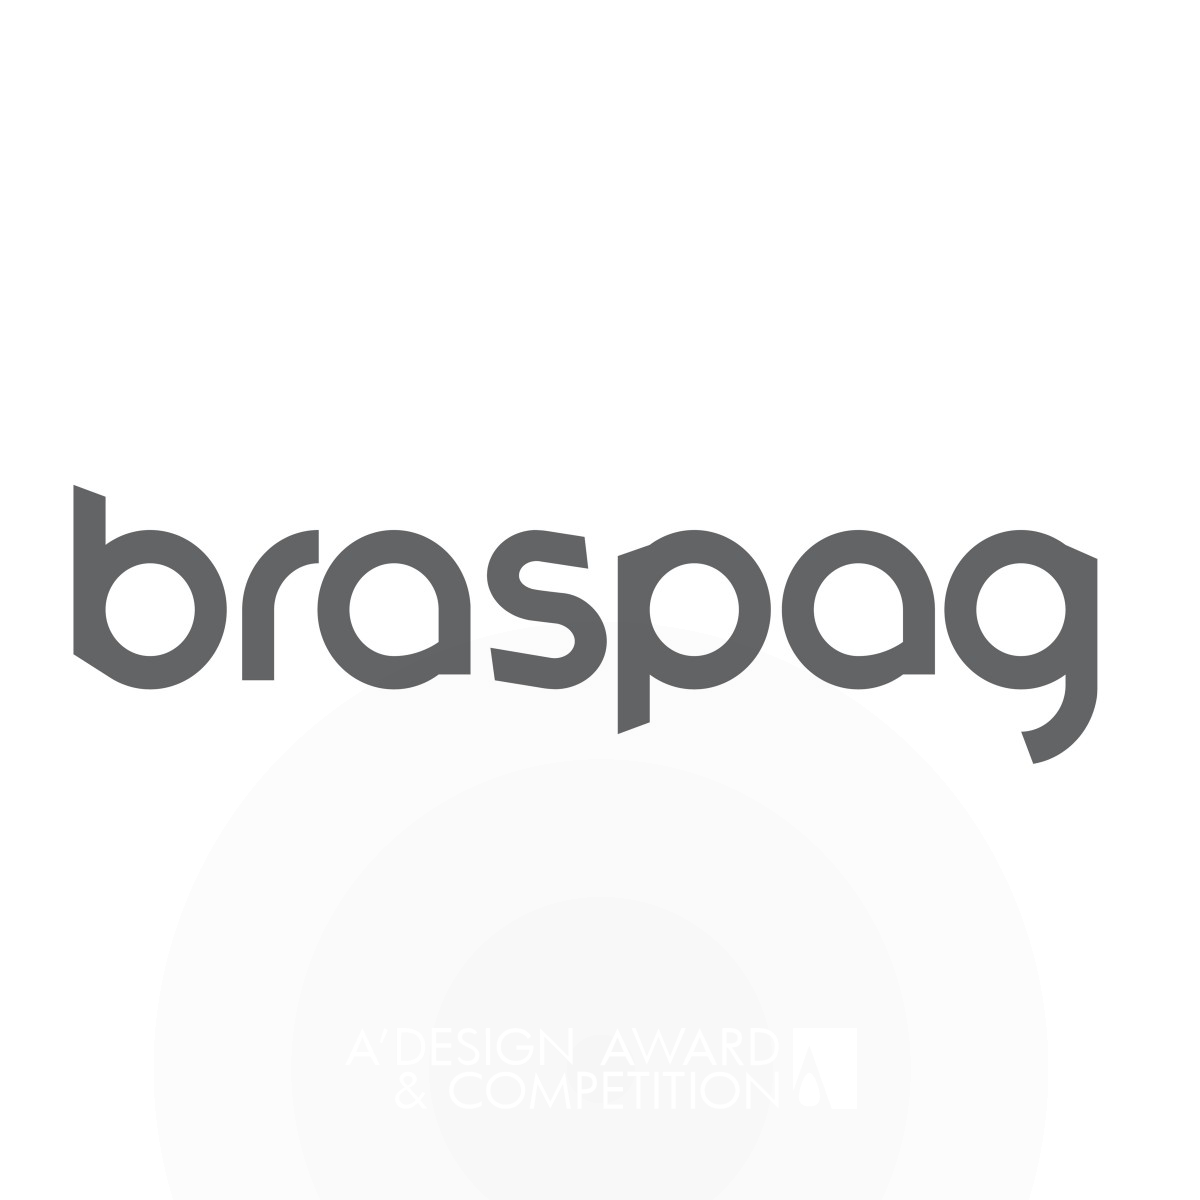 Braspag <b>Payment Technology Company Branding